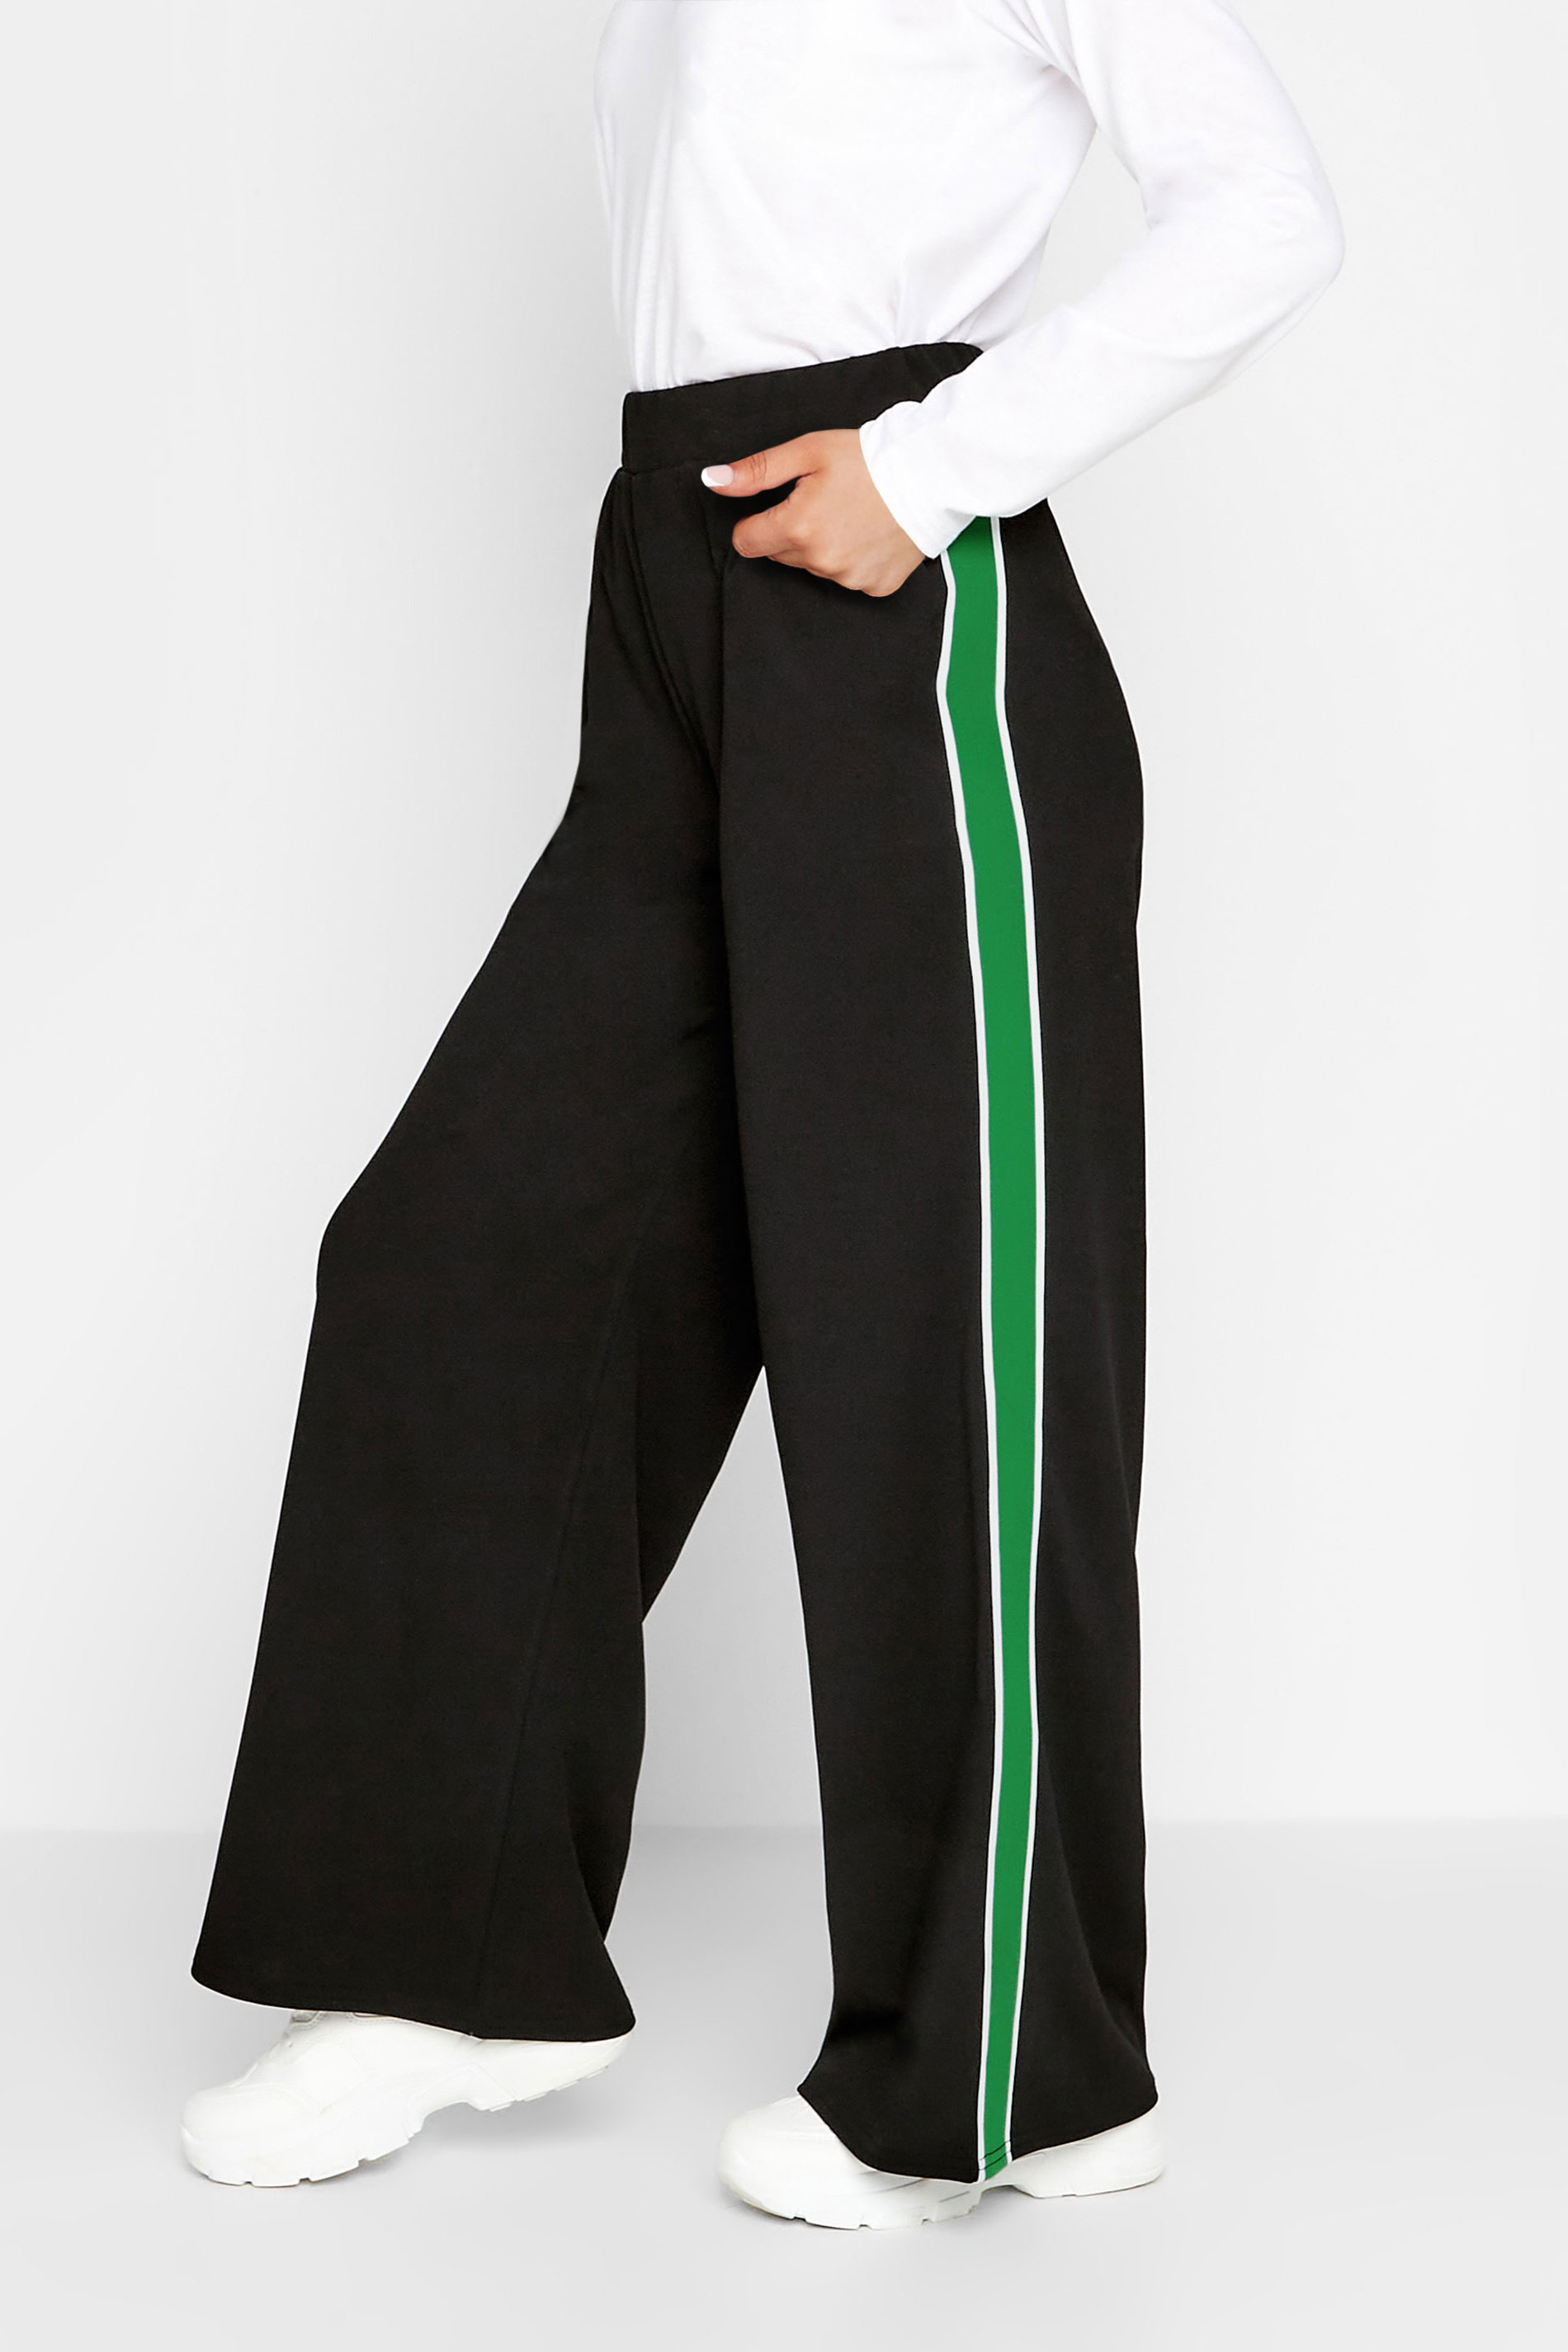 Craig Green: Black Stripe Trousers | SSENSE